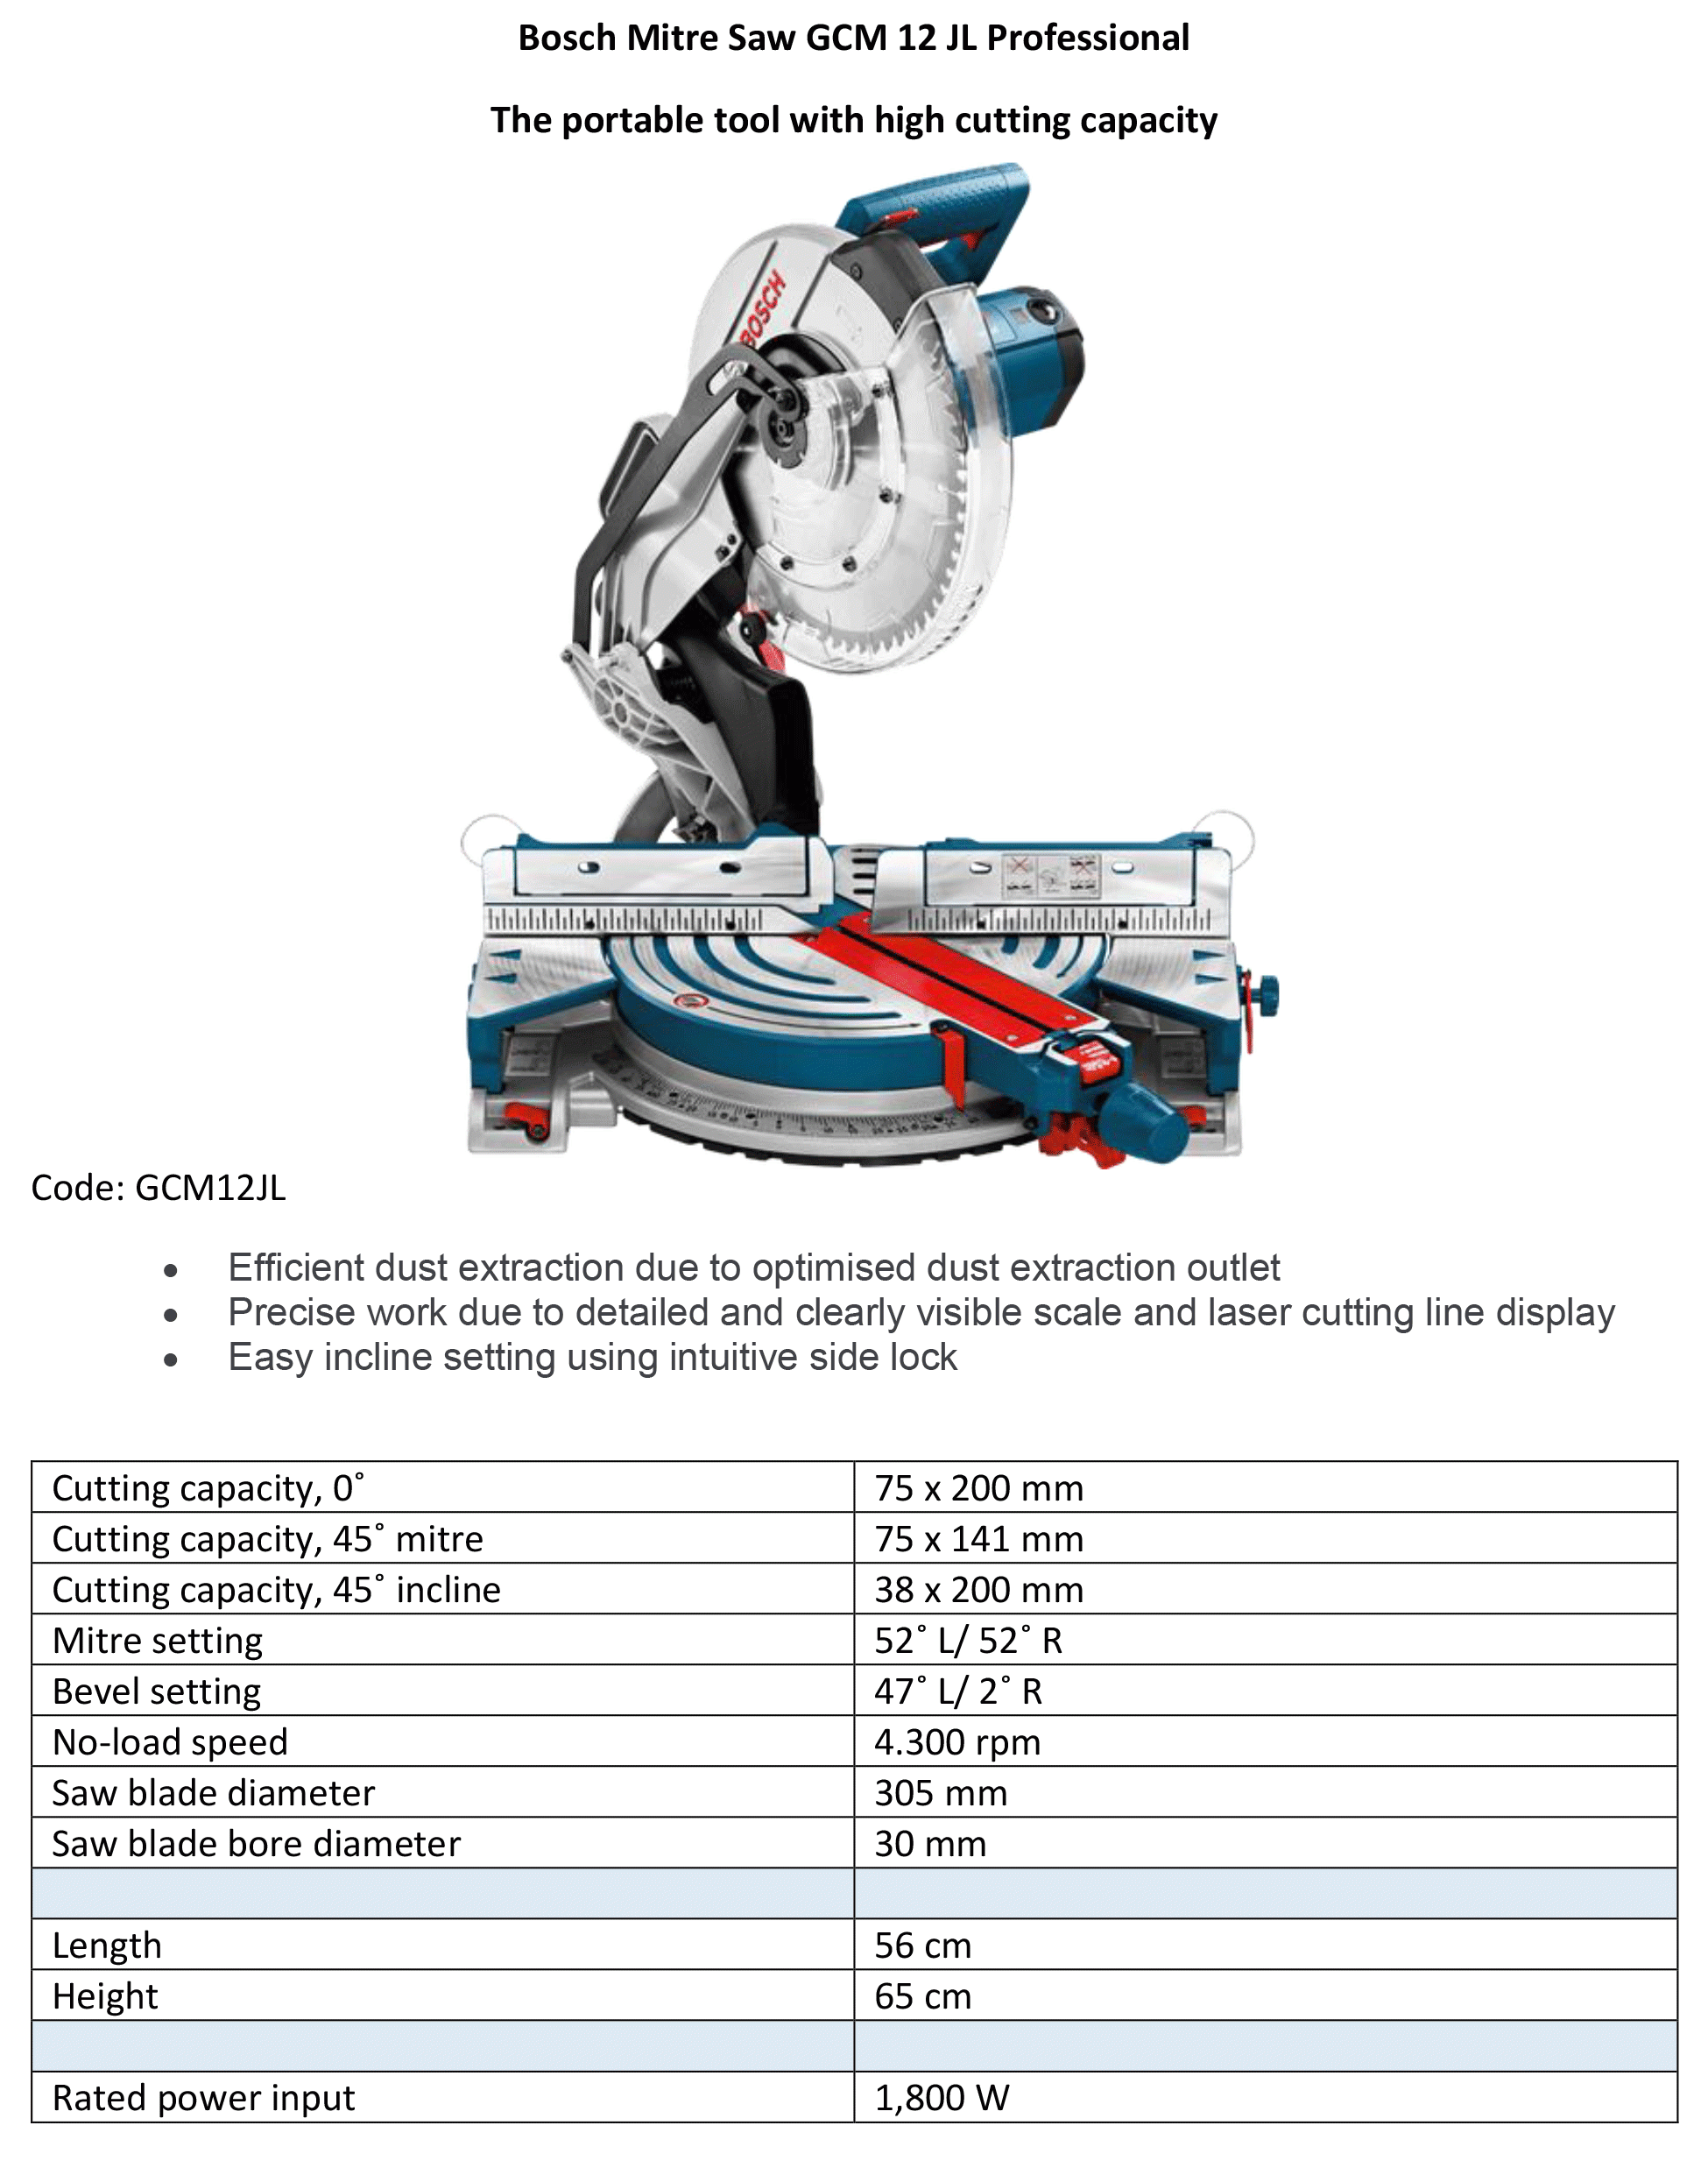 Bosch-Mitre-Saw-GCM-12-JL-Professional-i